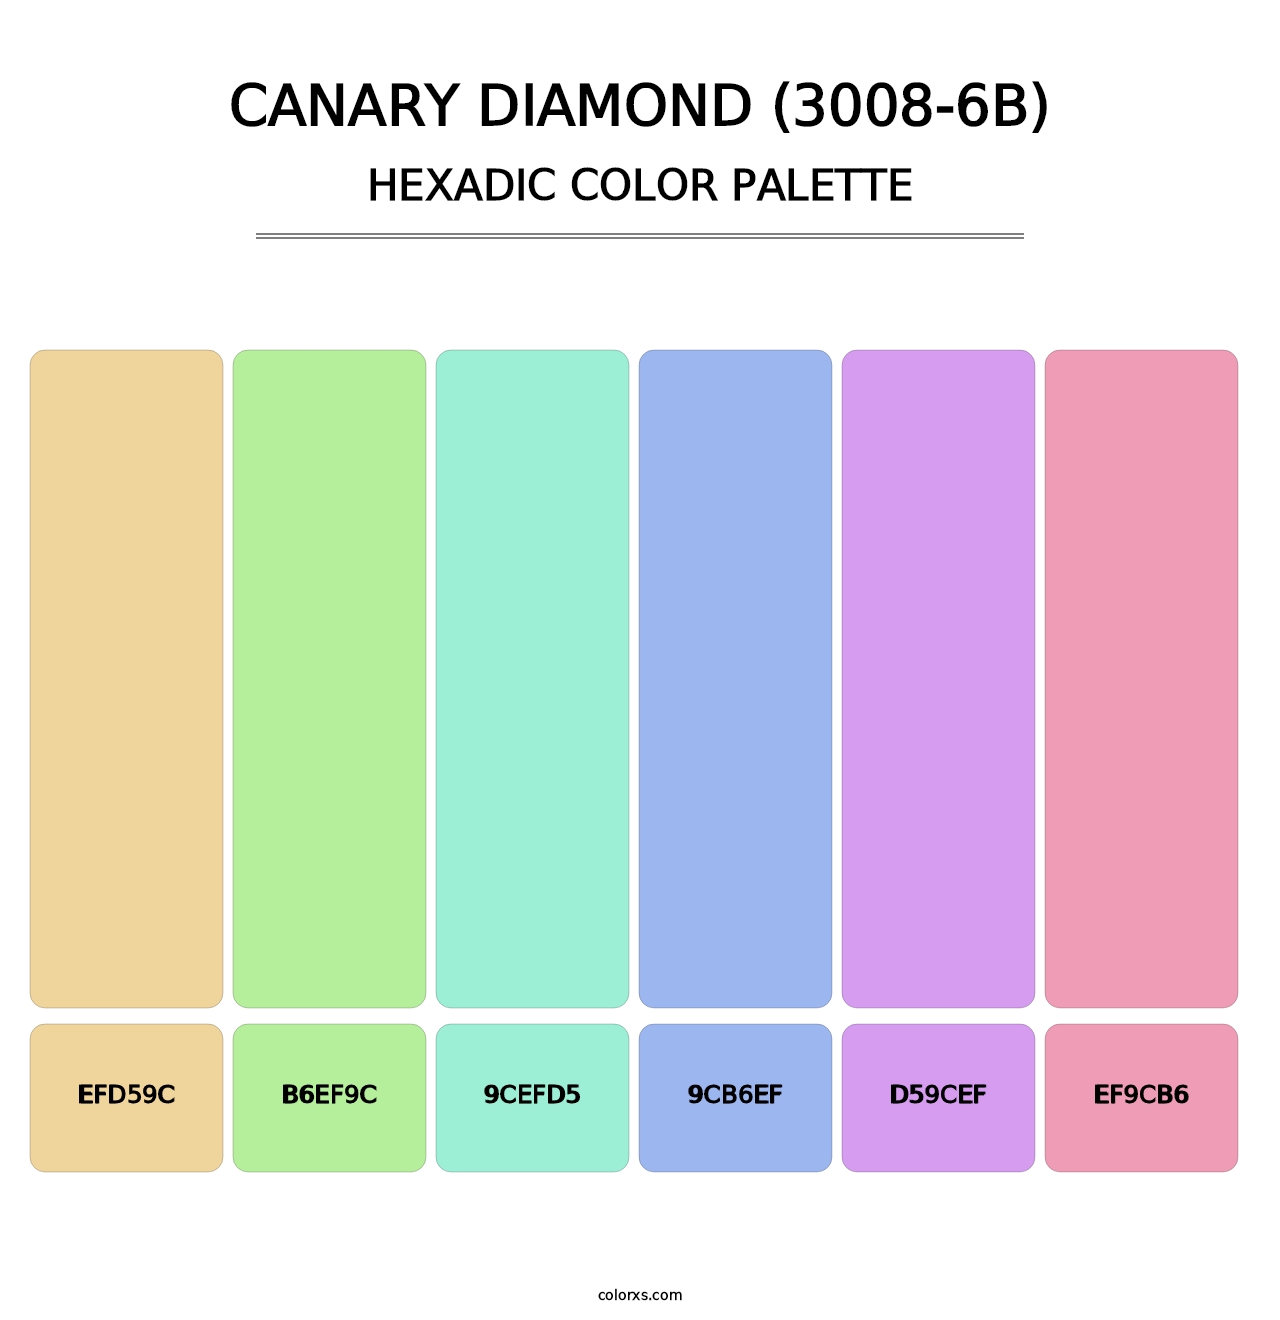 Canary Diamond (3008-6B) - Hexadic Color Palette